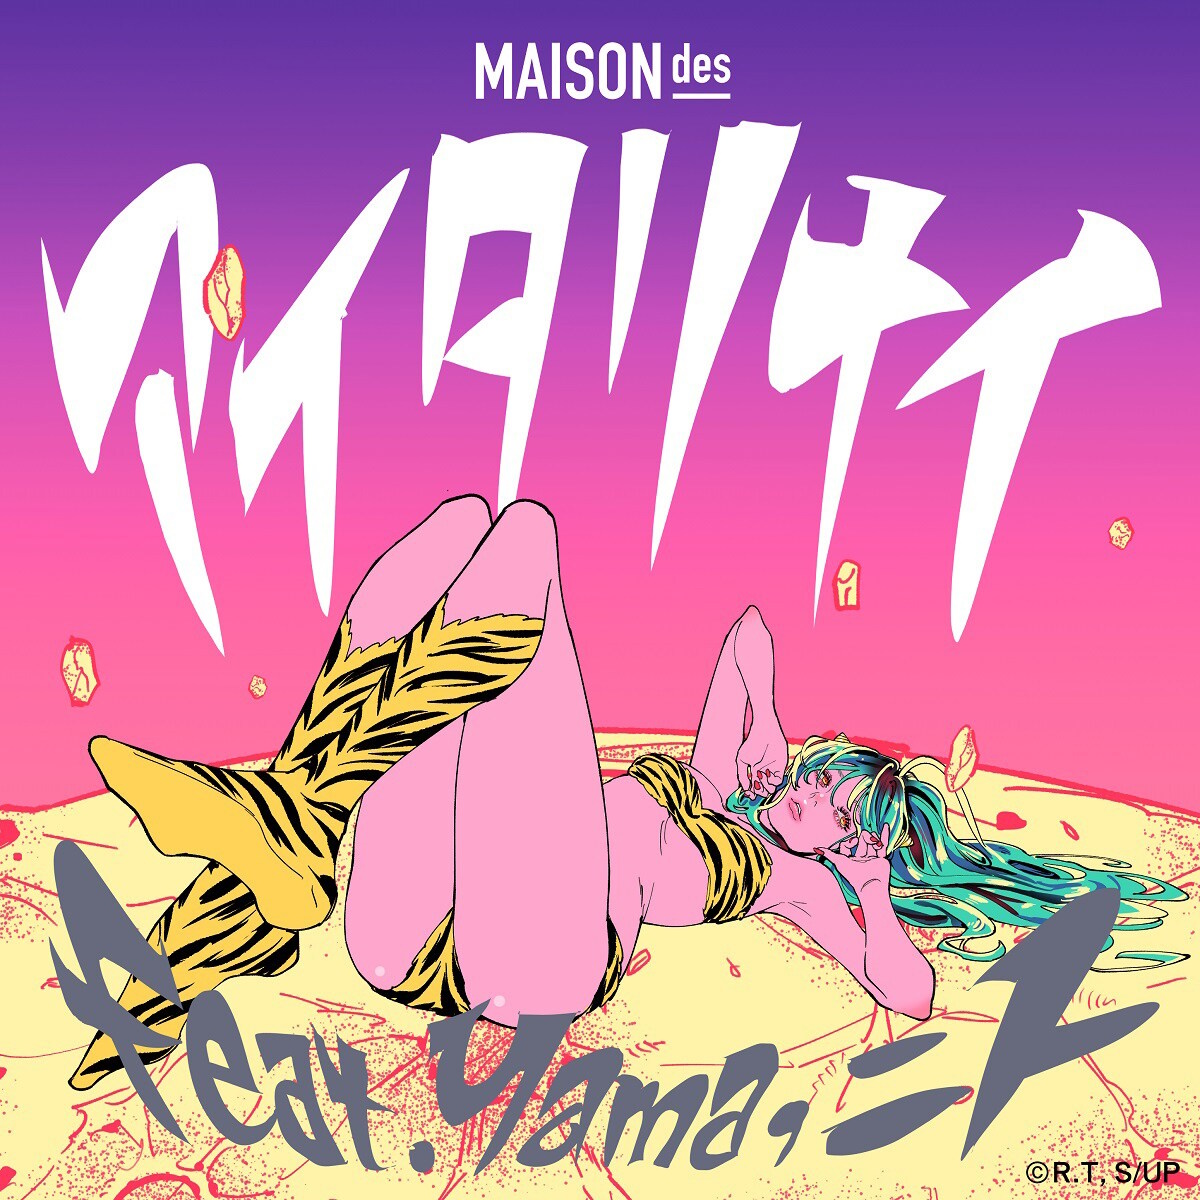 『MAISONdes - アイワナムチュー feat. asmi, すりぃ』収録の『アイワナムチュー feat. asmi, すりぃ』ジャケット